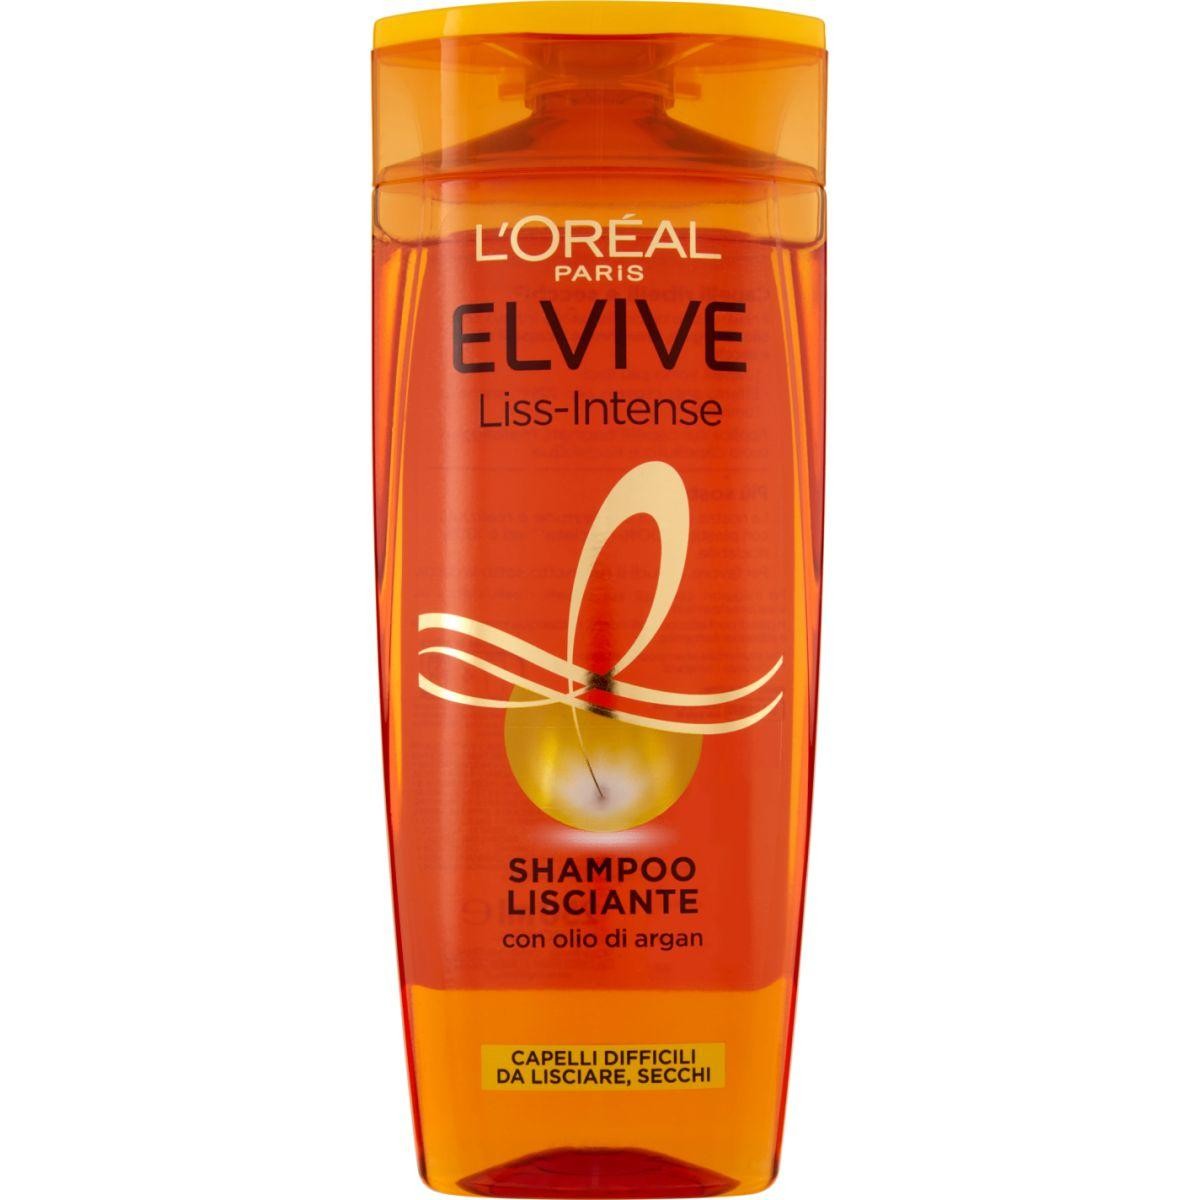 L'Oreal Elvive Shampoo Liss-Intense